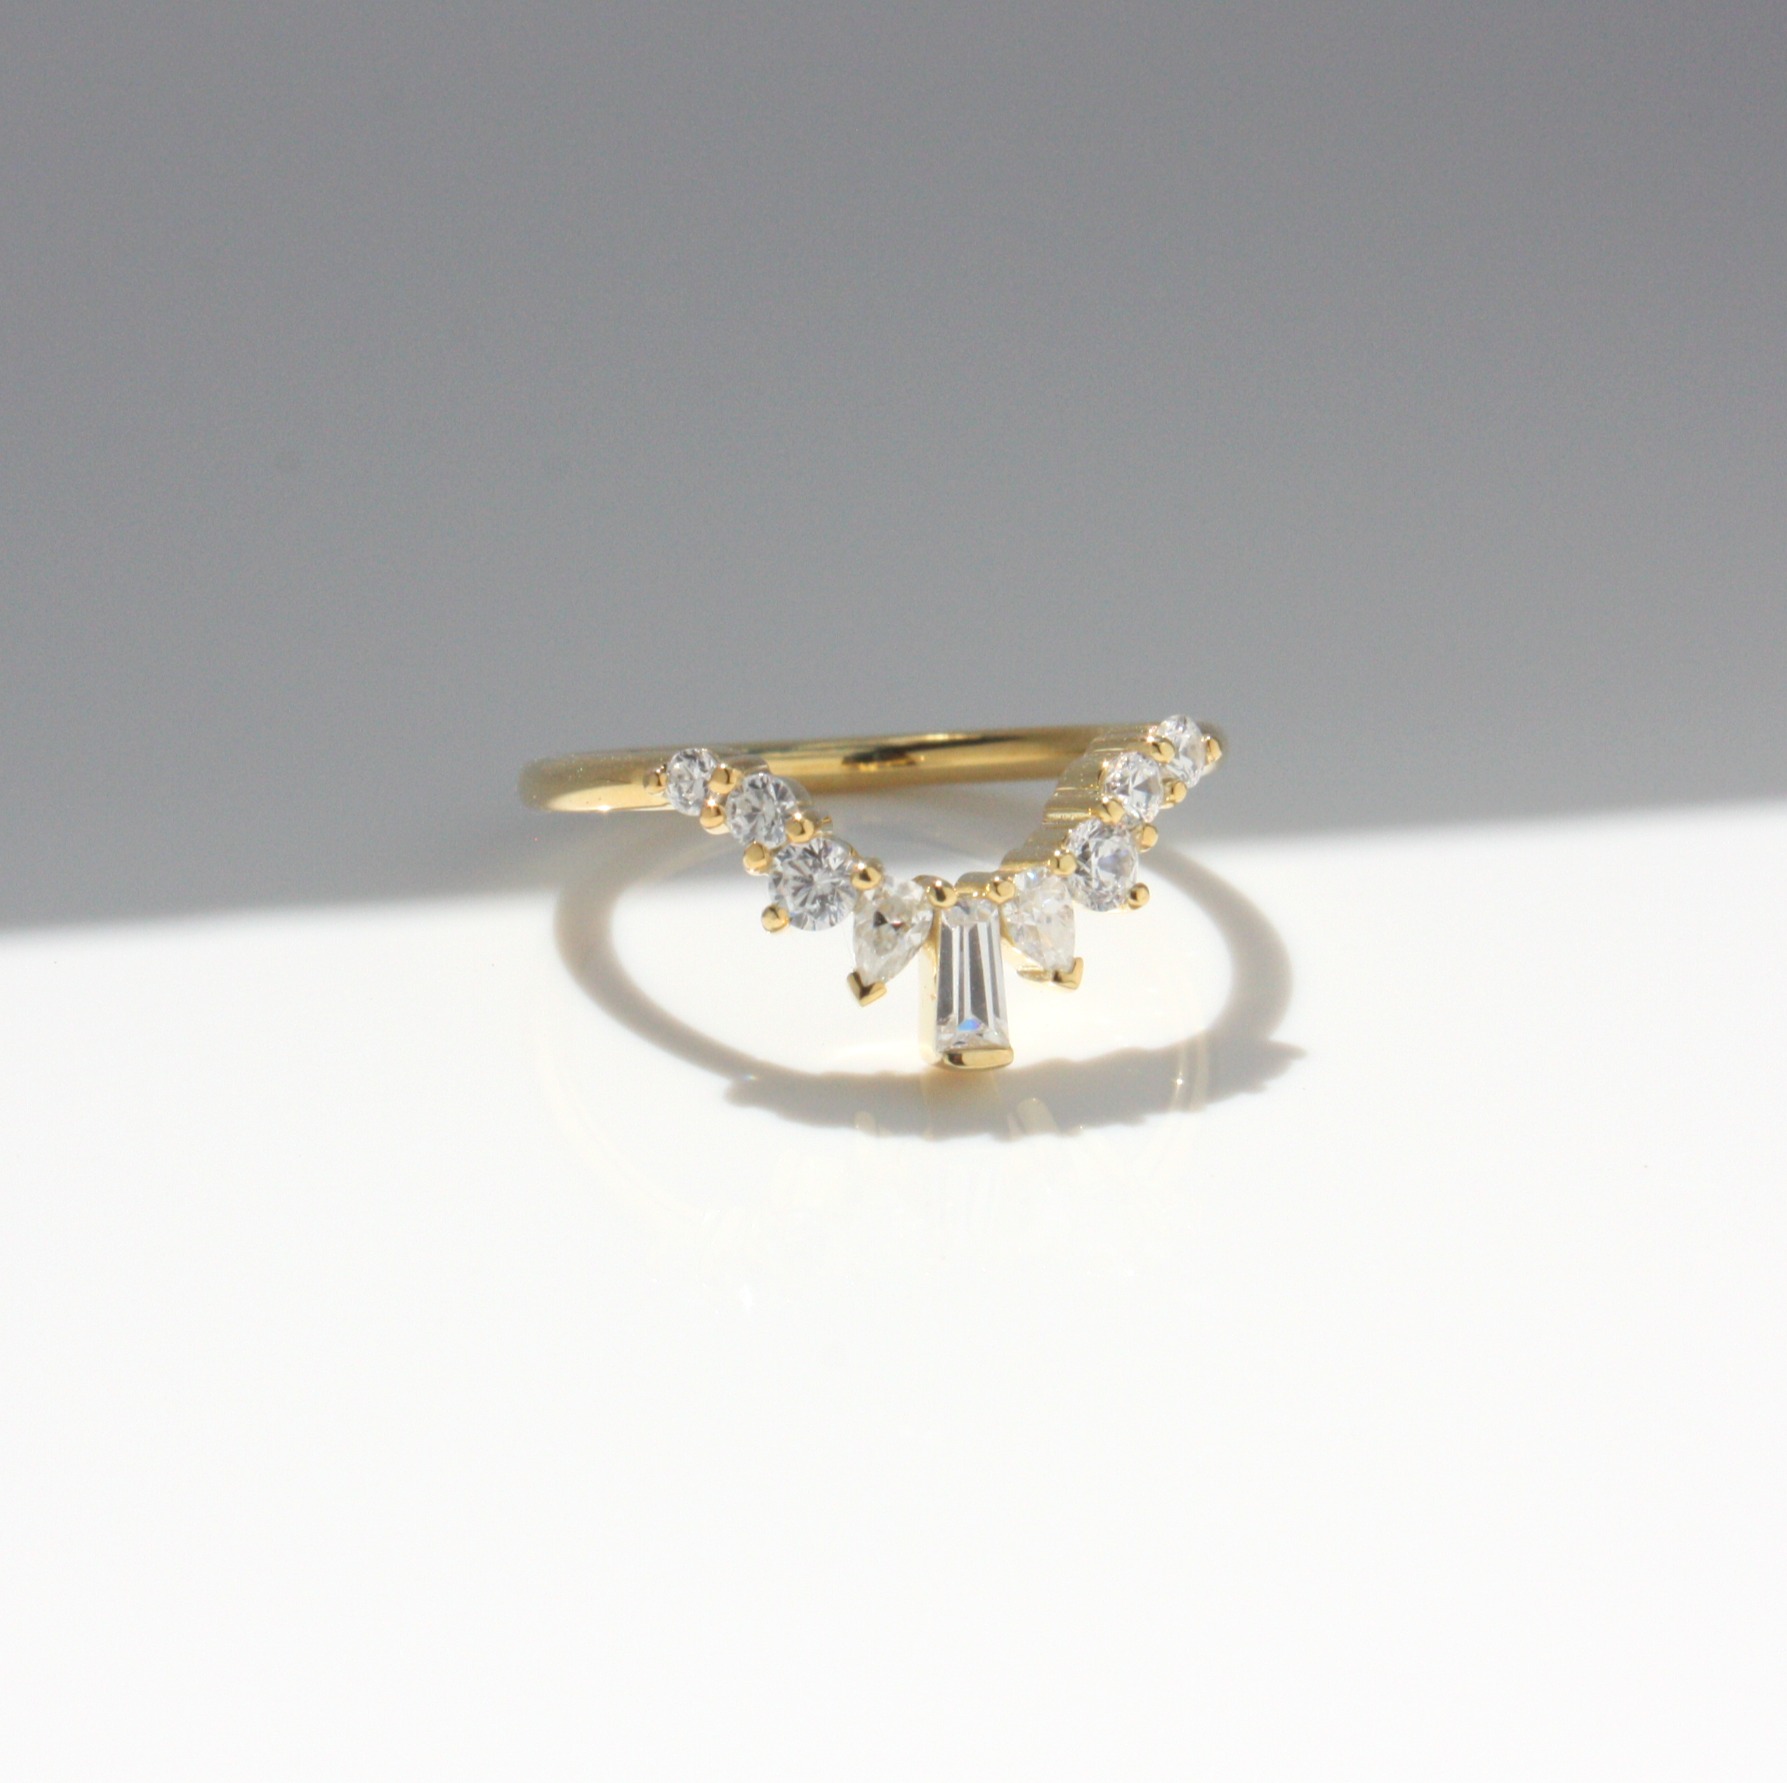 The Diamond Crown Ring